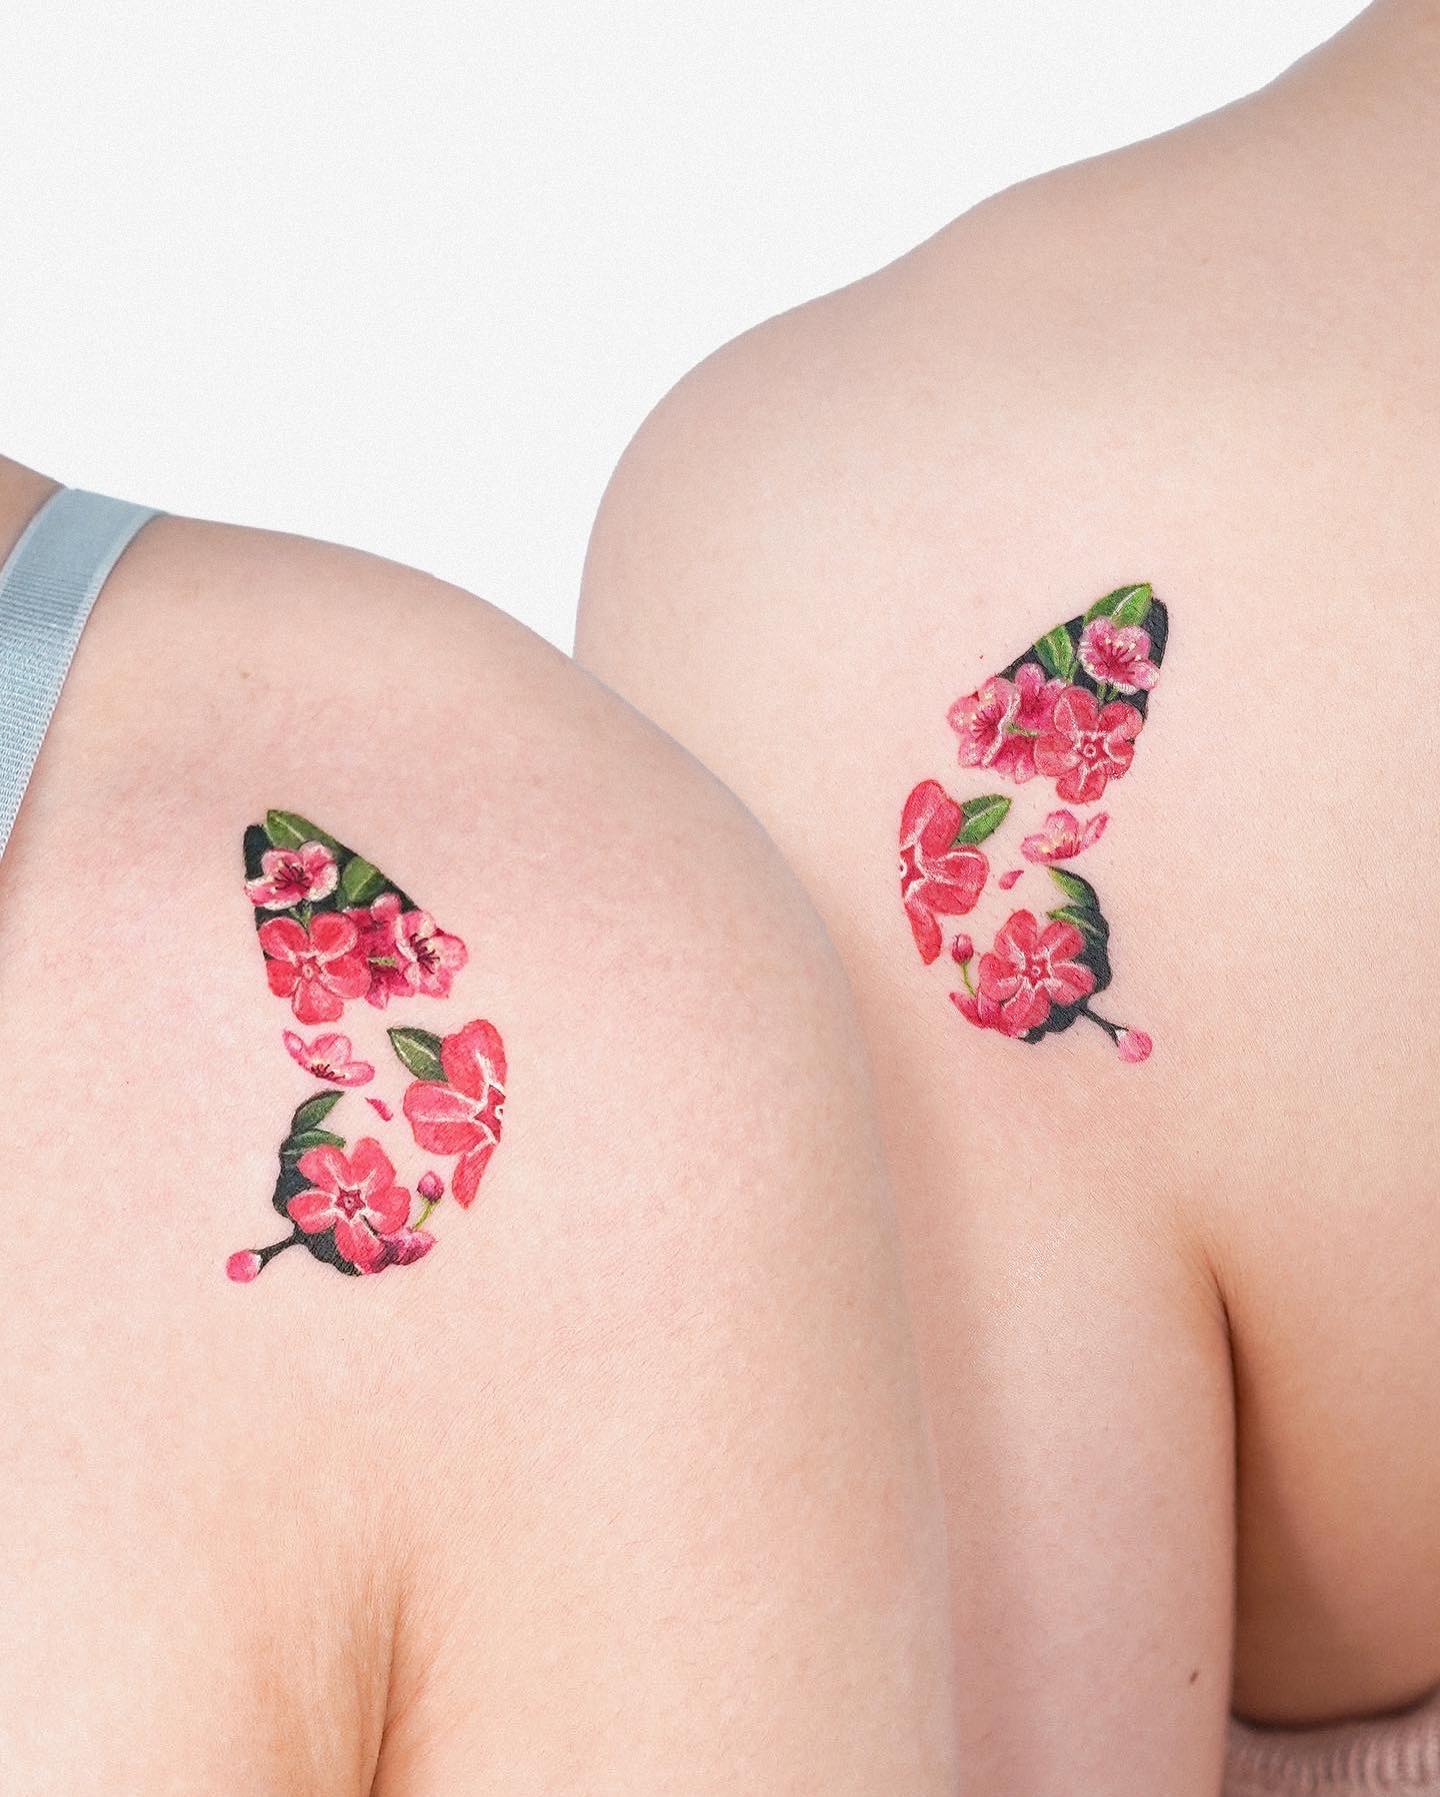 Tatuaje de mariposa femenina y floral